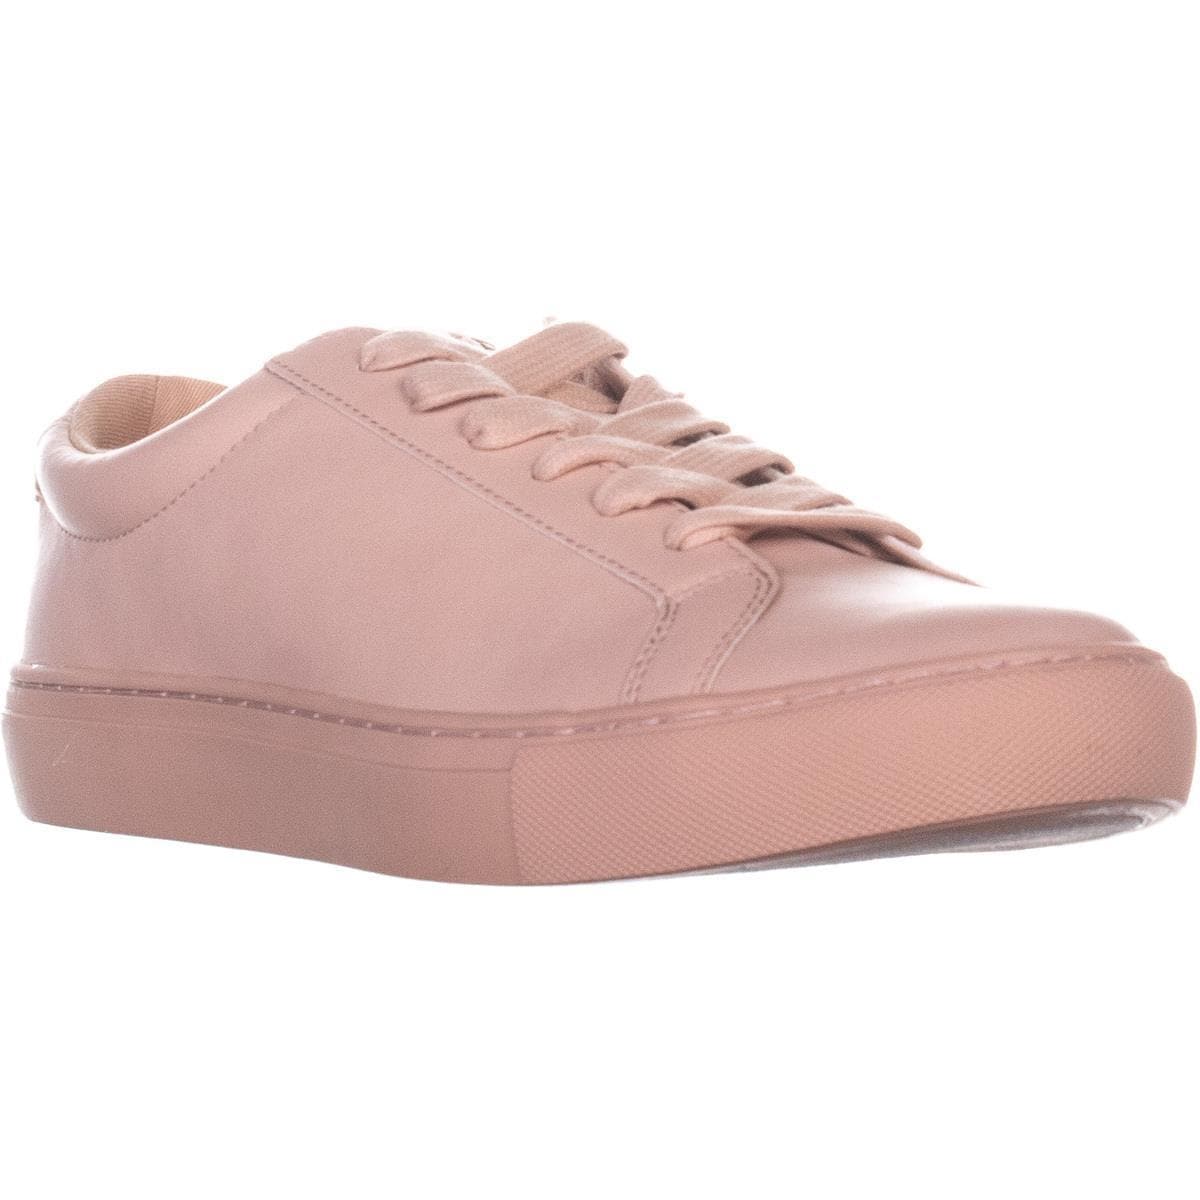 light pink mens sneakers